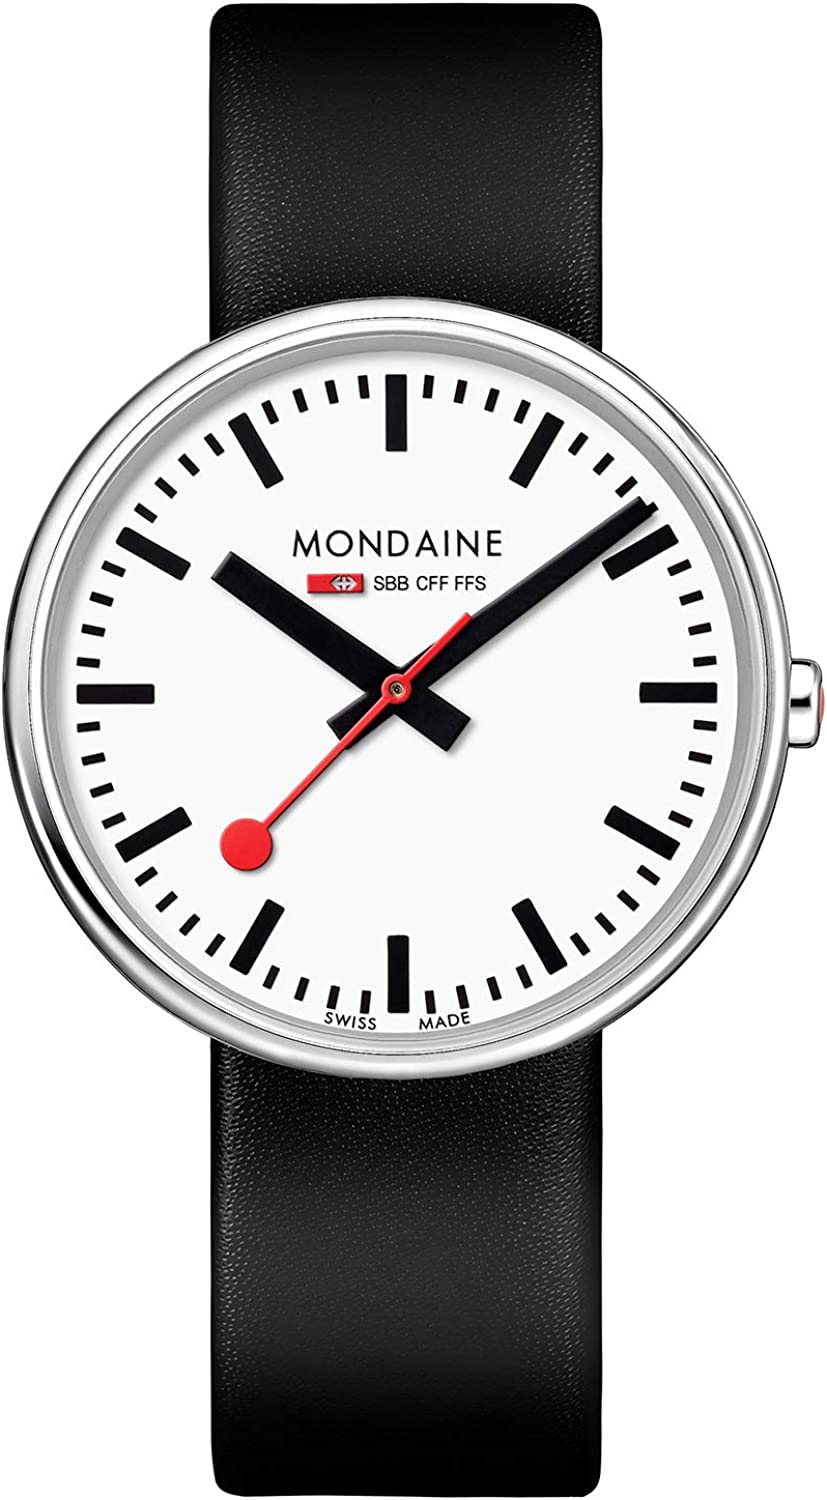 Mondaine Women's SBB Stainless Steel Swiss-Quartz Watch with Leather Strap, Black (Model: MSX.3511B.LB)